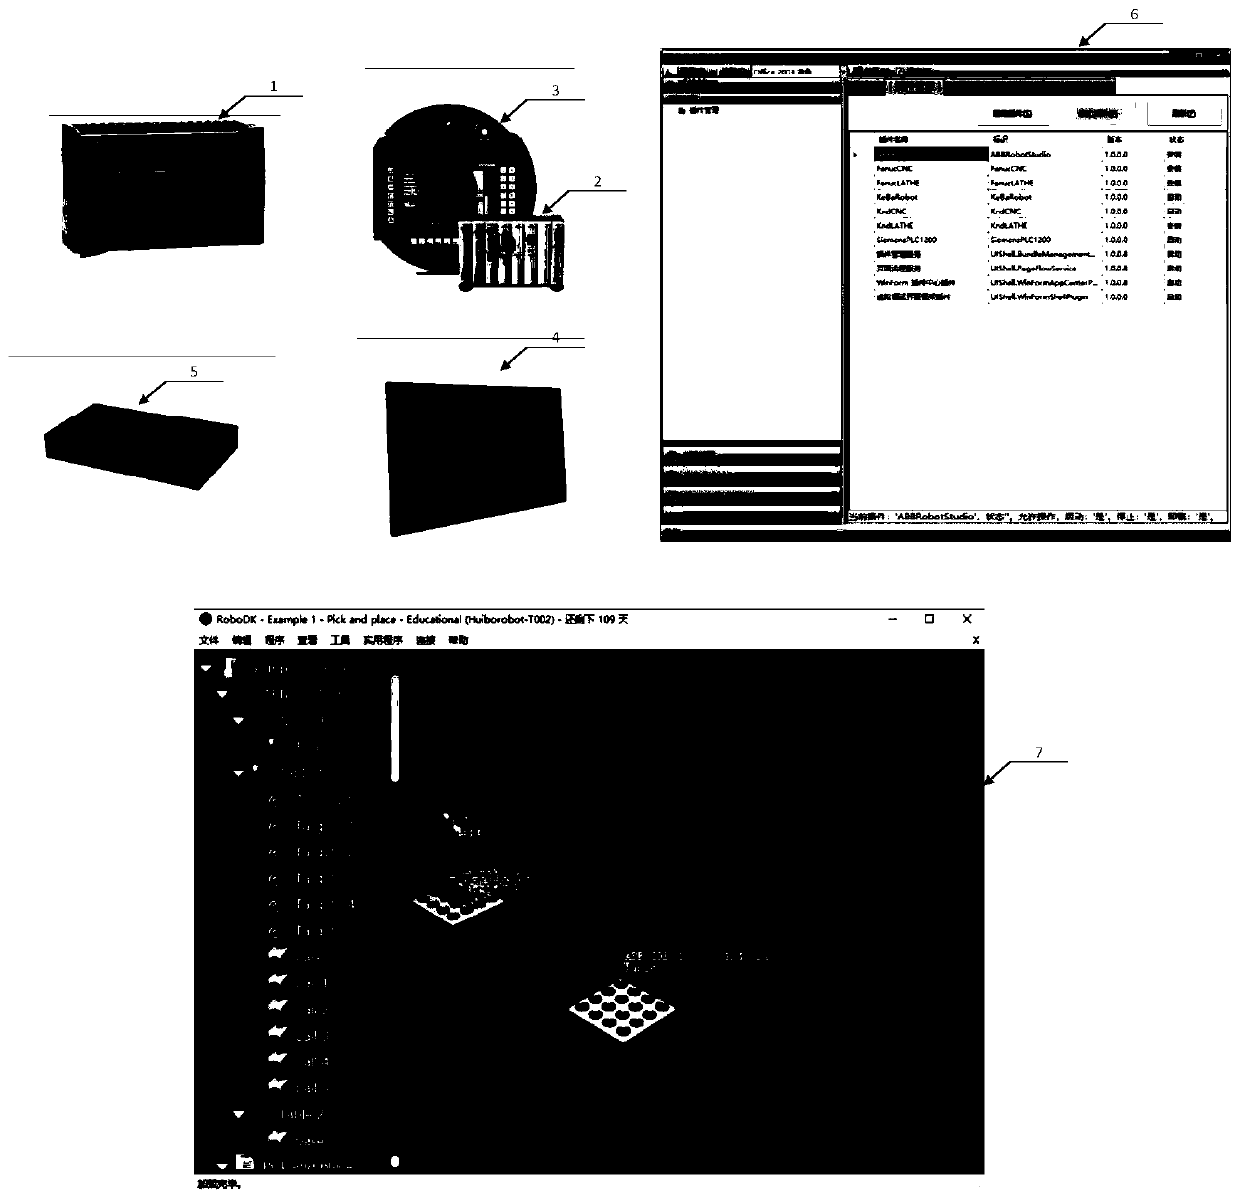 Virtual debugging system based on iopenworks